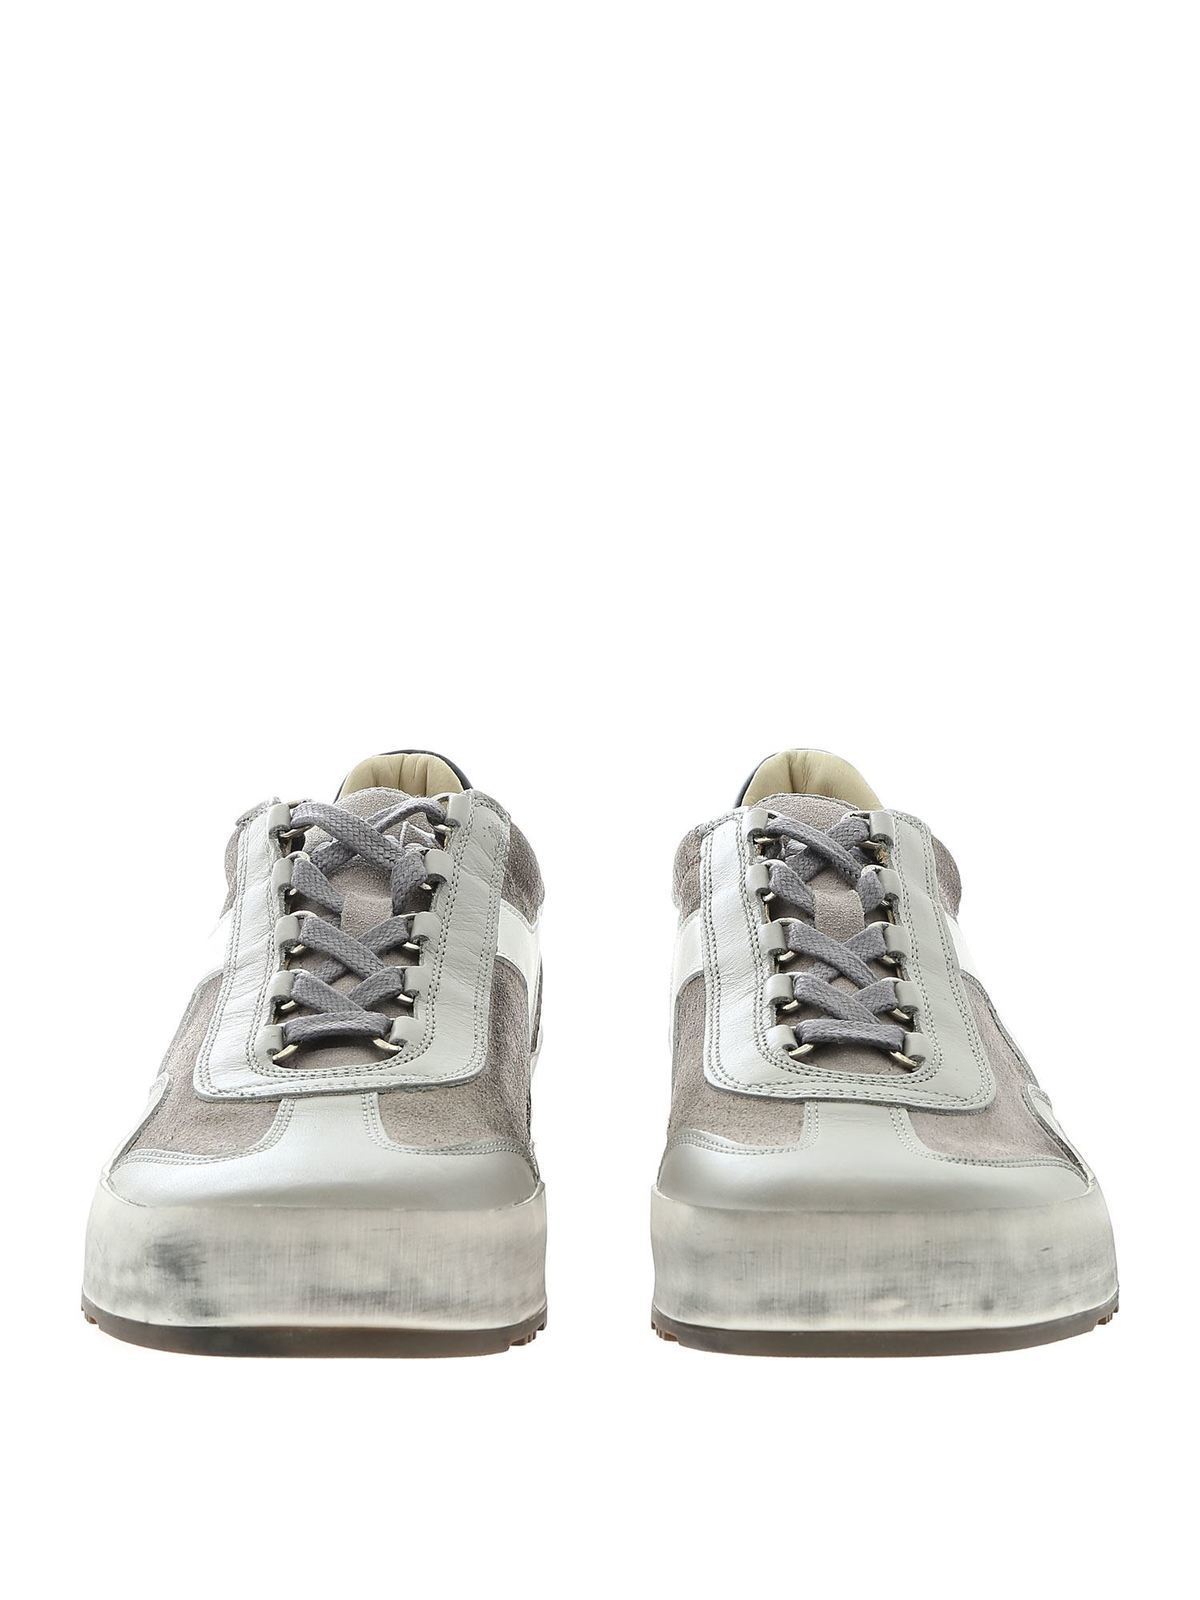 Diadora Heritage - B.Original H sneakers in grey - اسپرت،اسنیکرز -  20117474701C4751